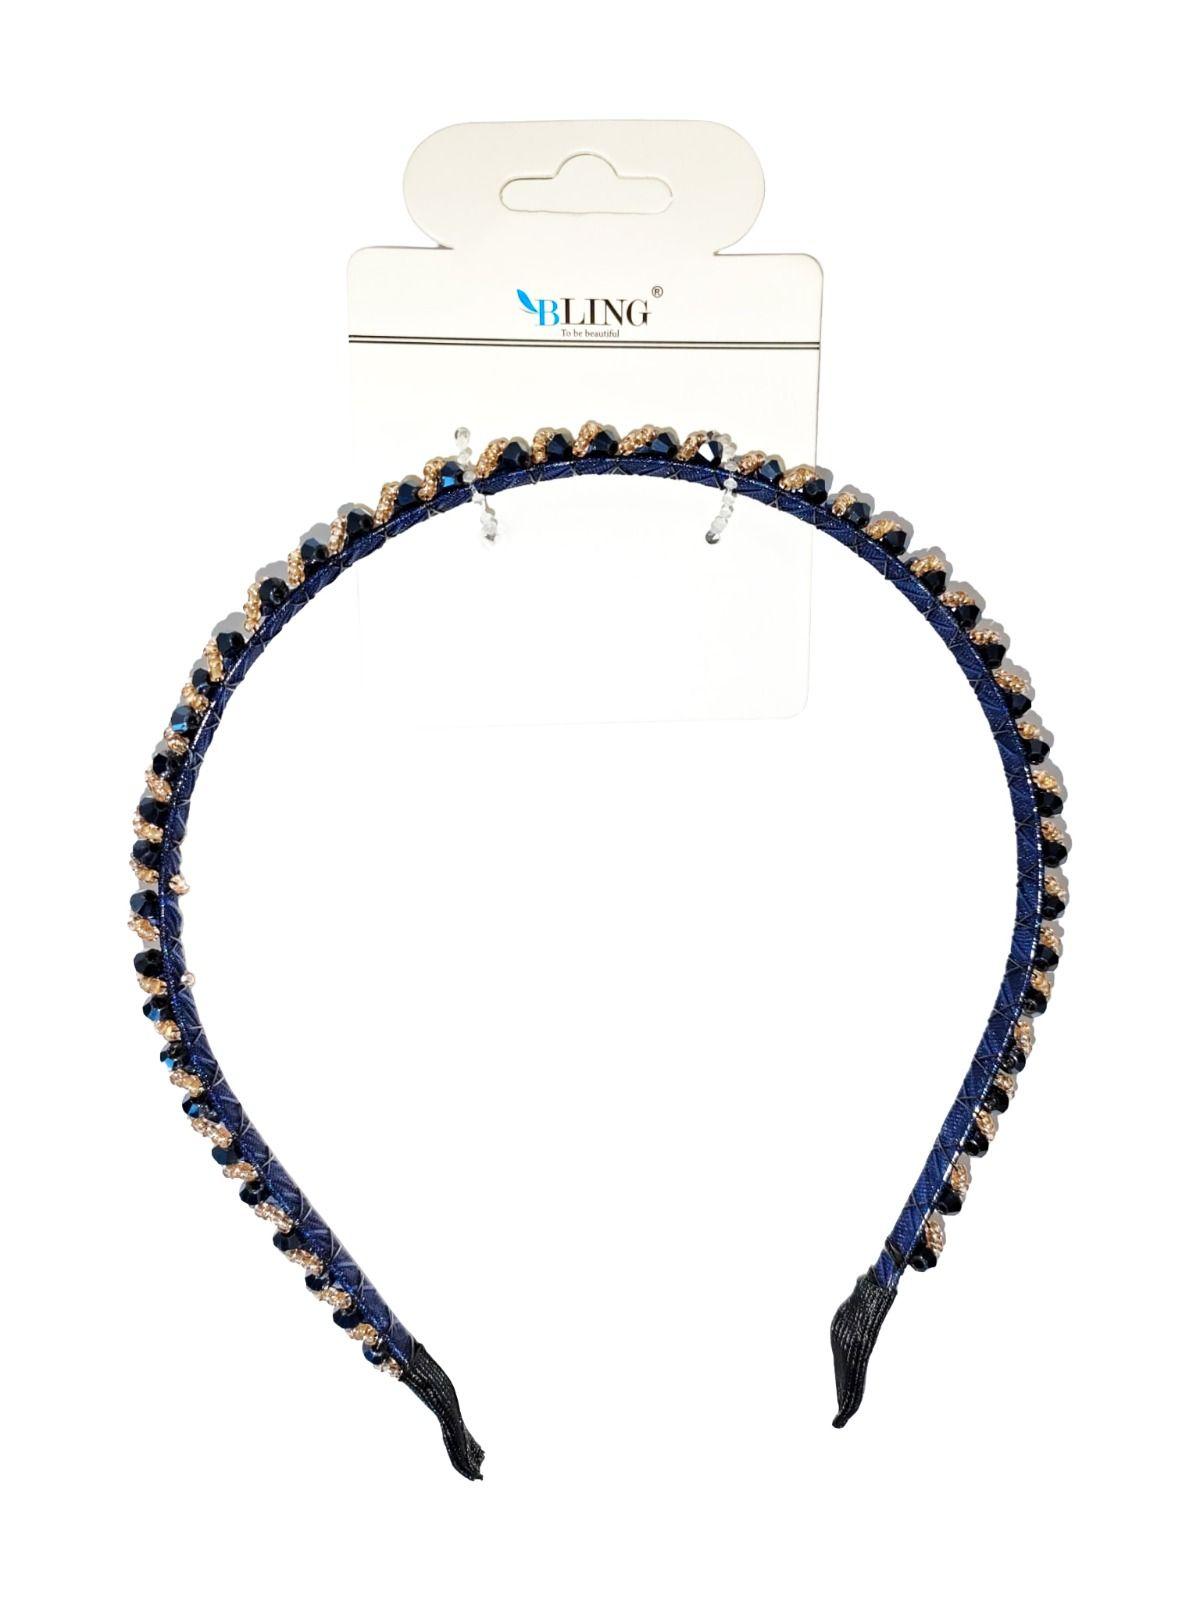 BLING diamond and gold braided hairband - dark blue